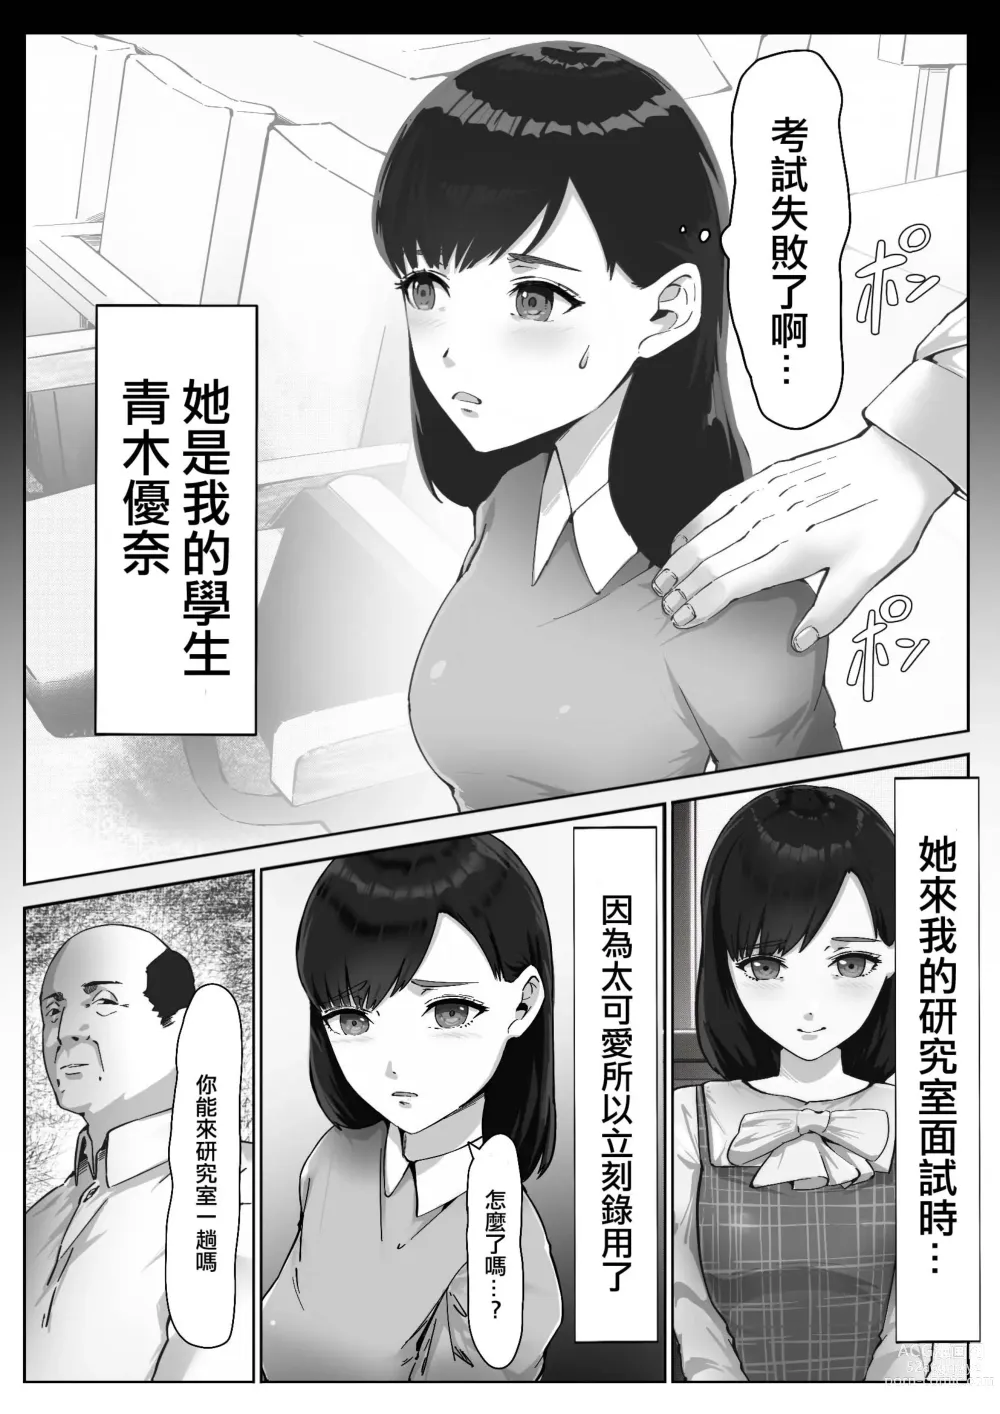 Page 4 of doujinshi 因為想要學分所以和老師上床了這件事